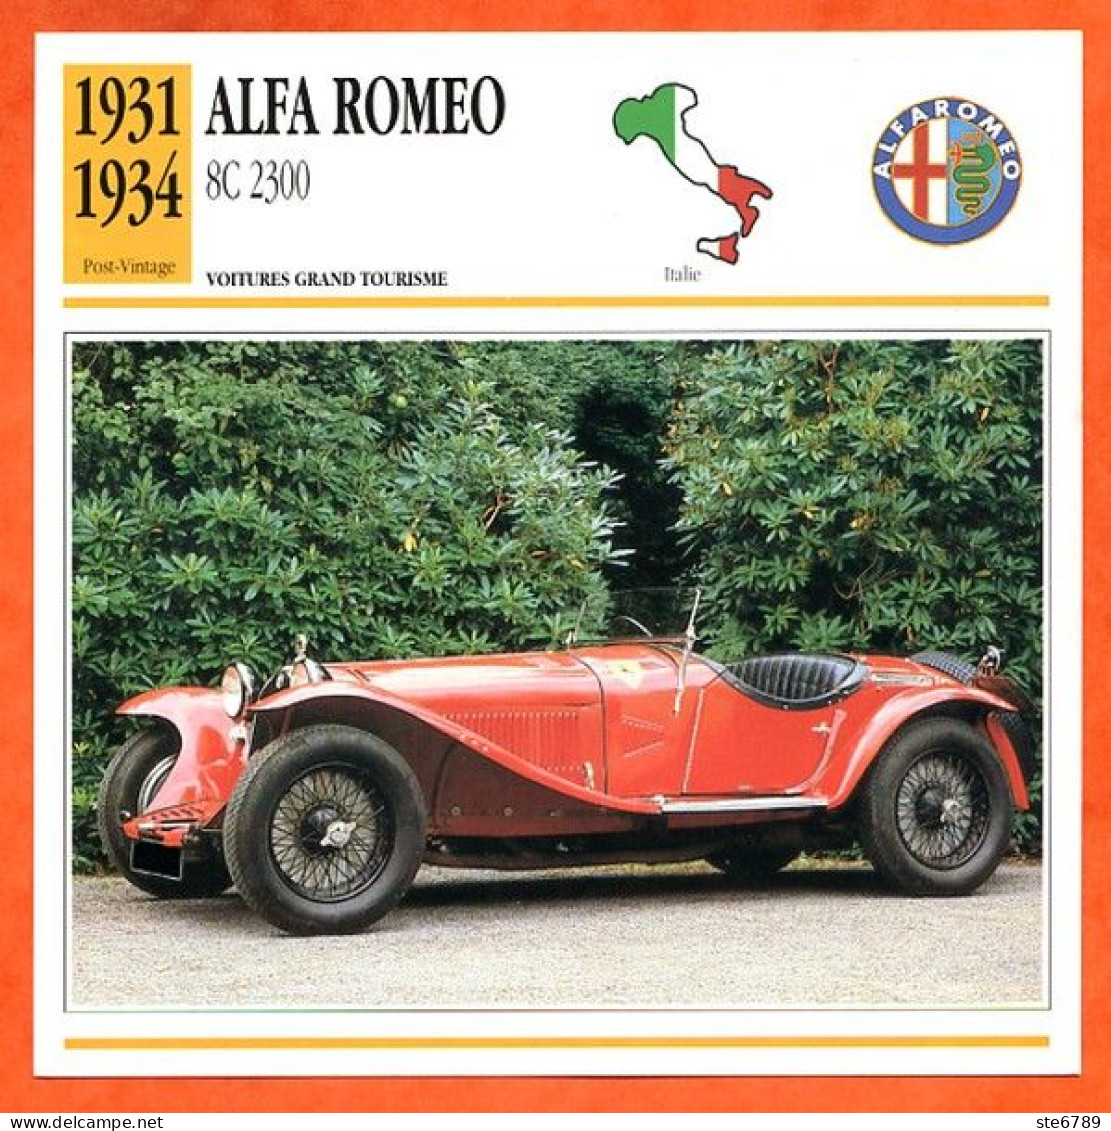 ALFA ROMEO 8C 2300 1931 Voiture Grand Tourisme Italie Fiche Technique Automobile - Voitures